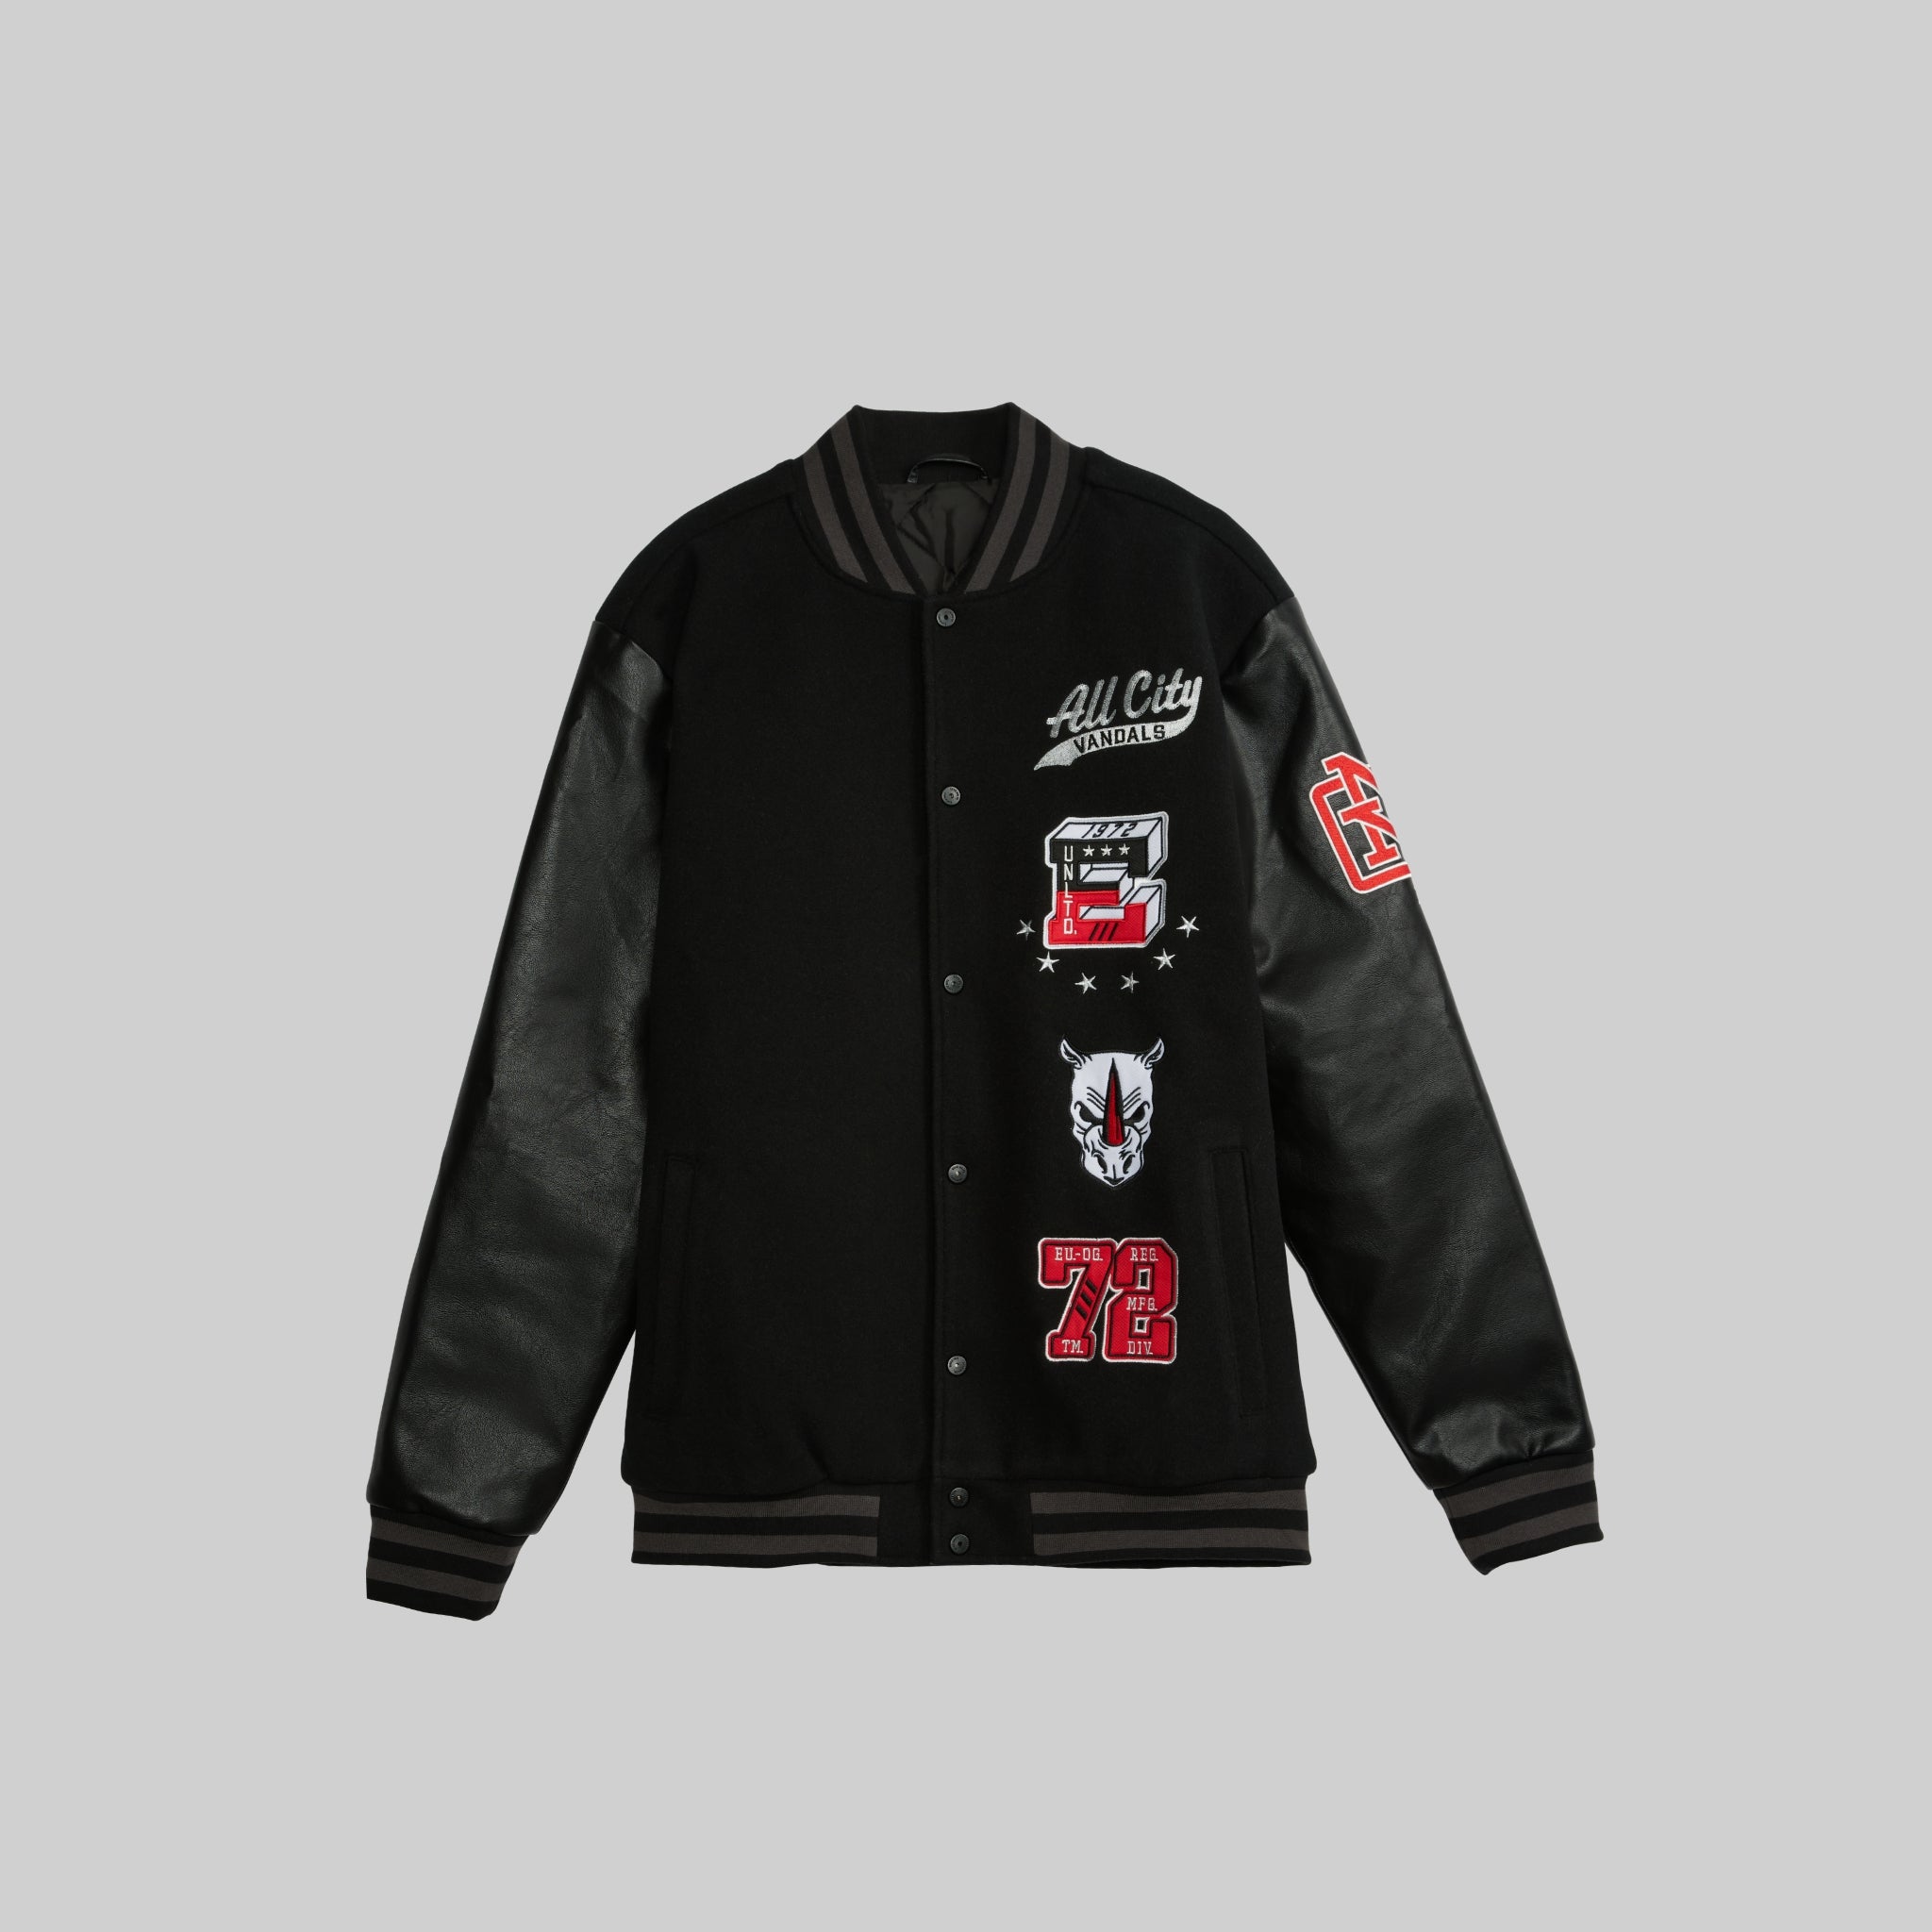 Vegan Leather Contrast Stitch Jacket - Black